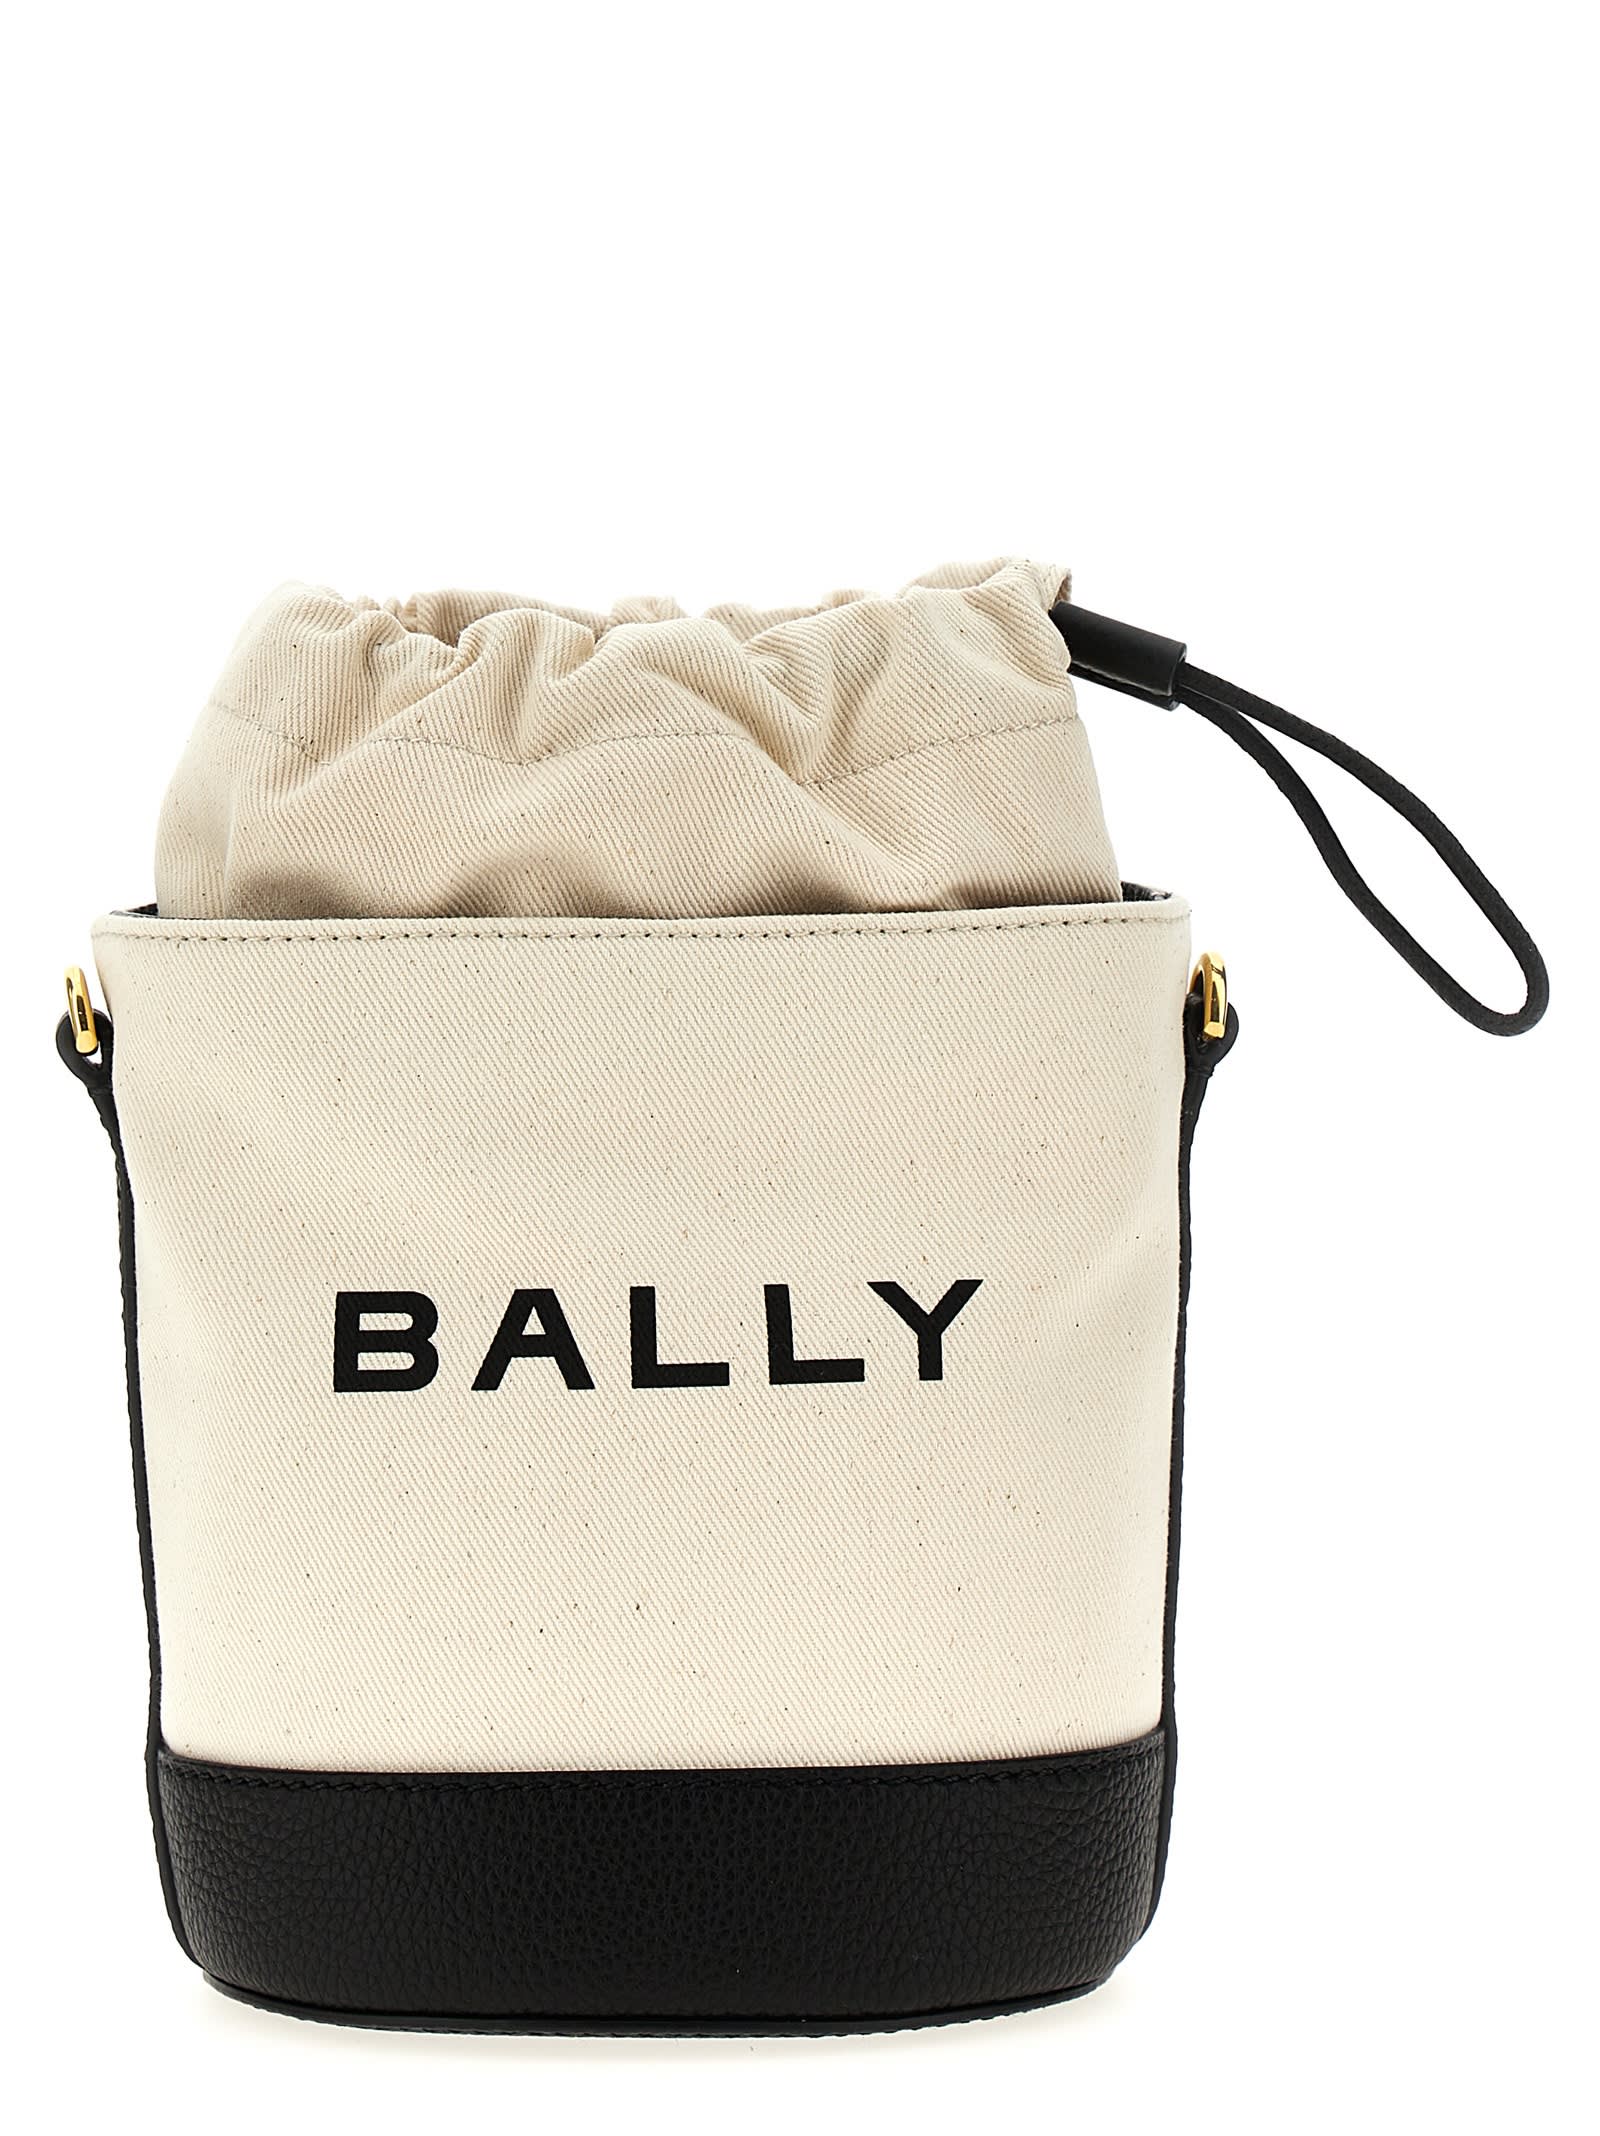 Shop Bally Bar Mini 8 Hours Shopping Bag In White/black